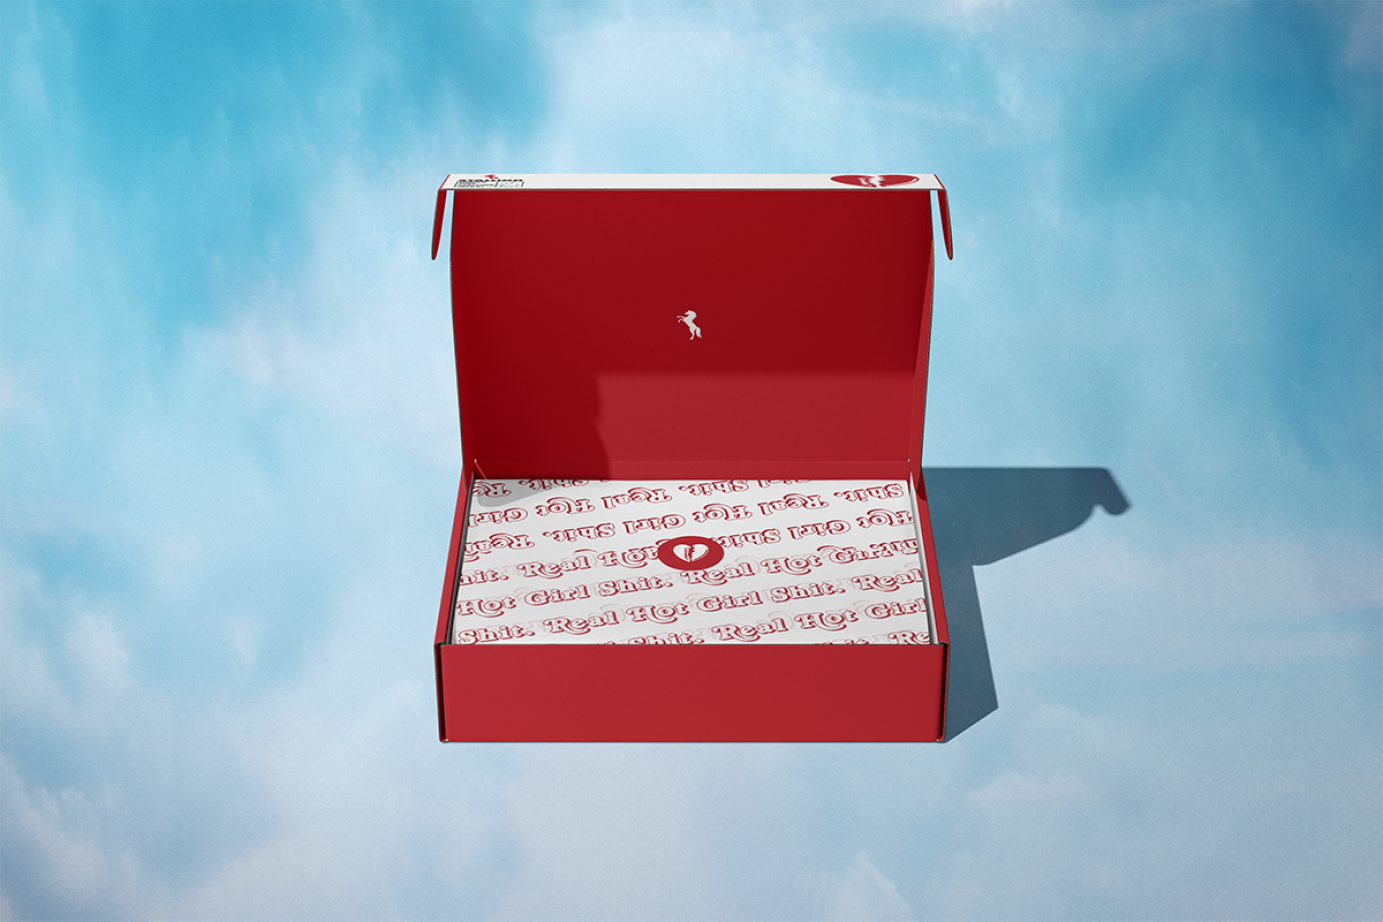 Megan Thee Stallion - Valentine's Box